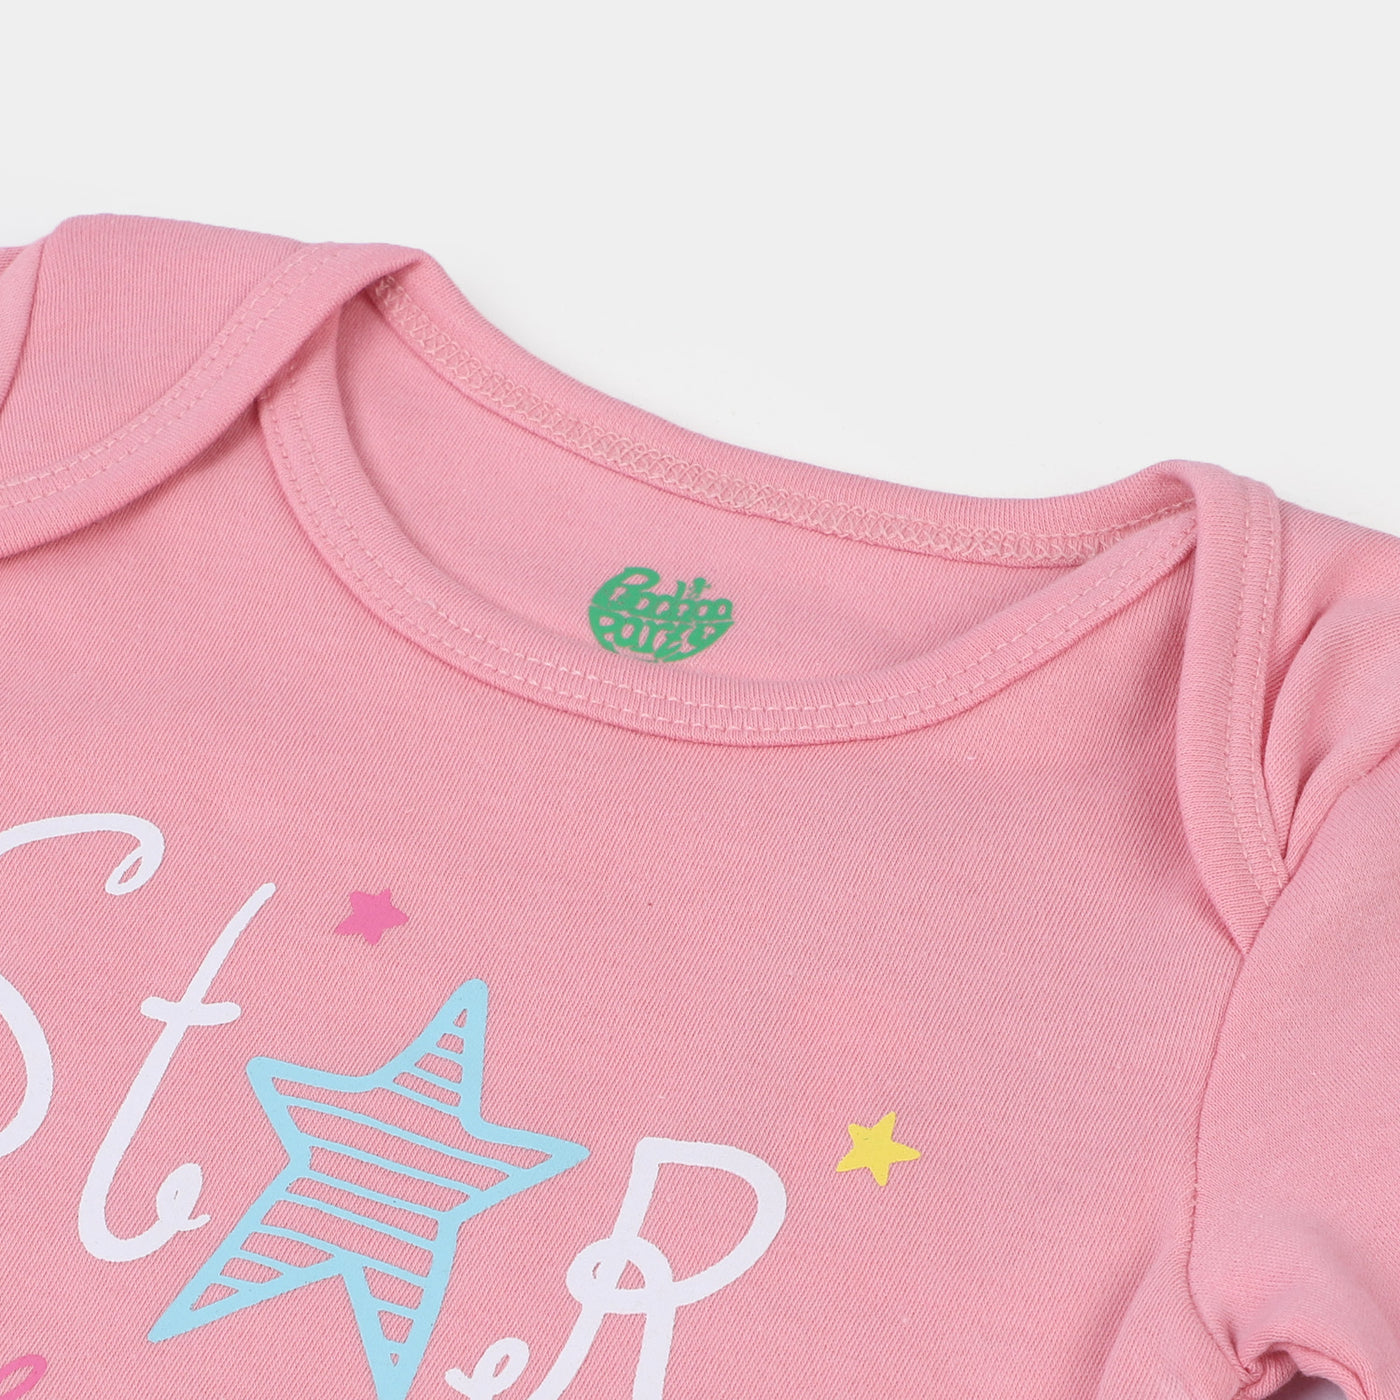 Infant Girl Cotton Interlock Romper Star-Candy Pink